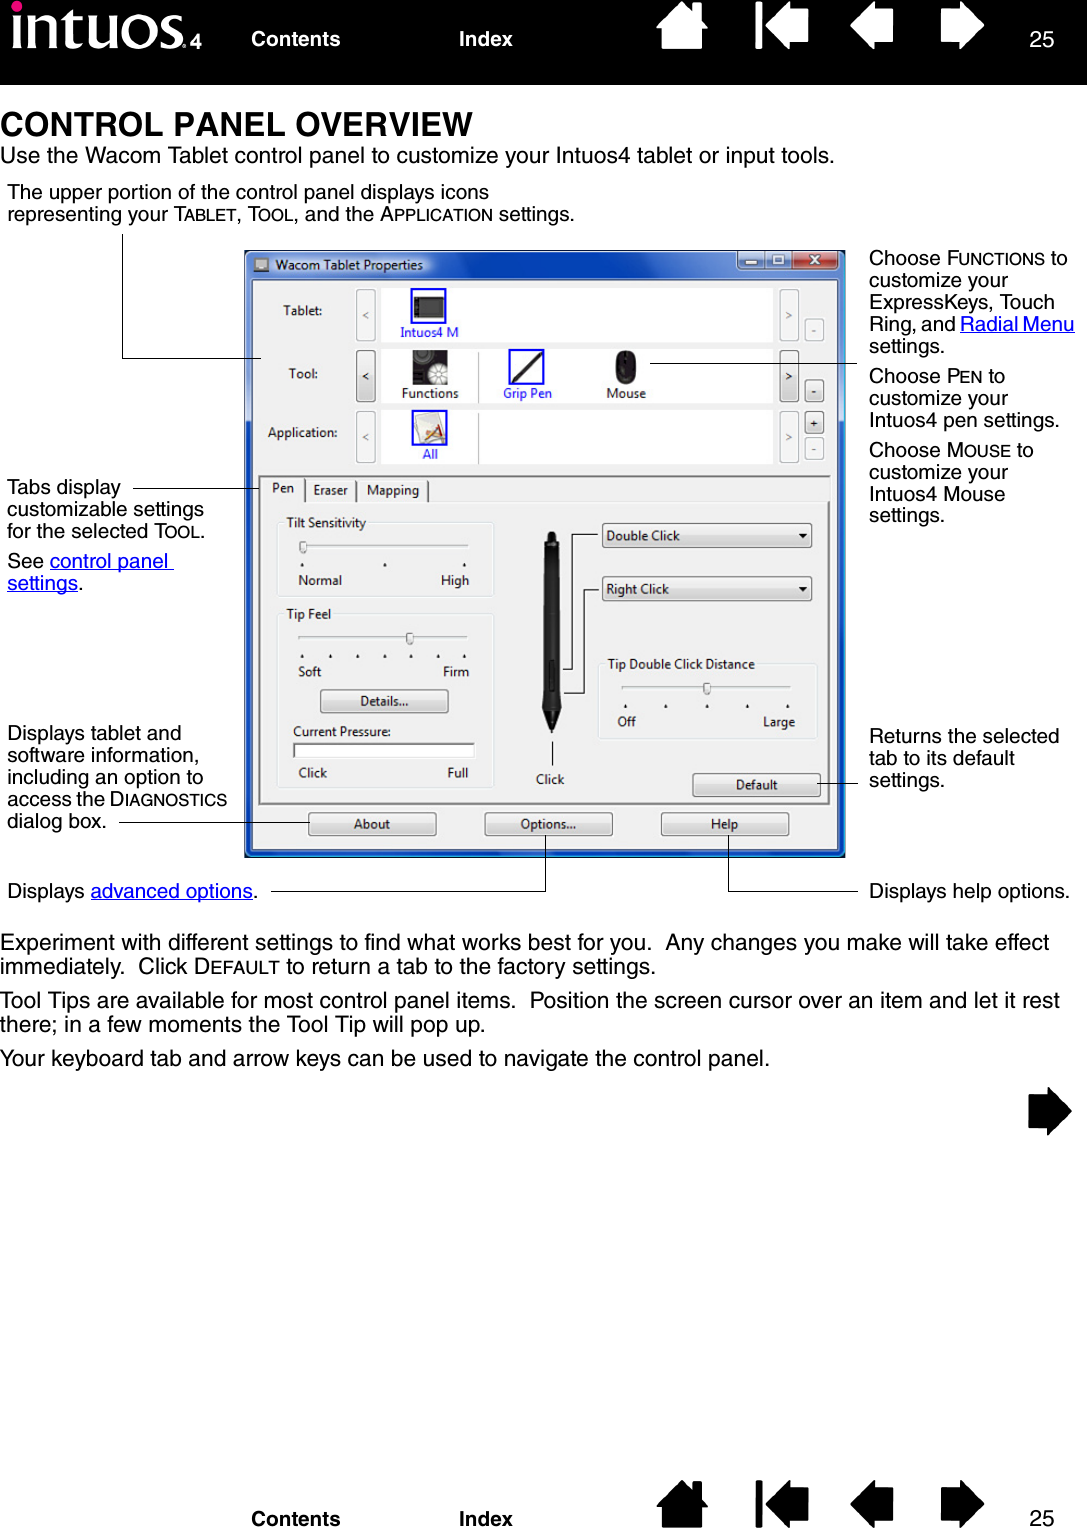 Wacom Intuos4 Software Download Mac